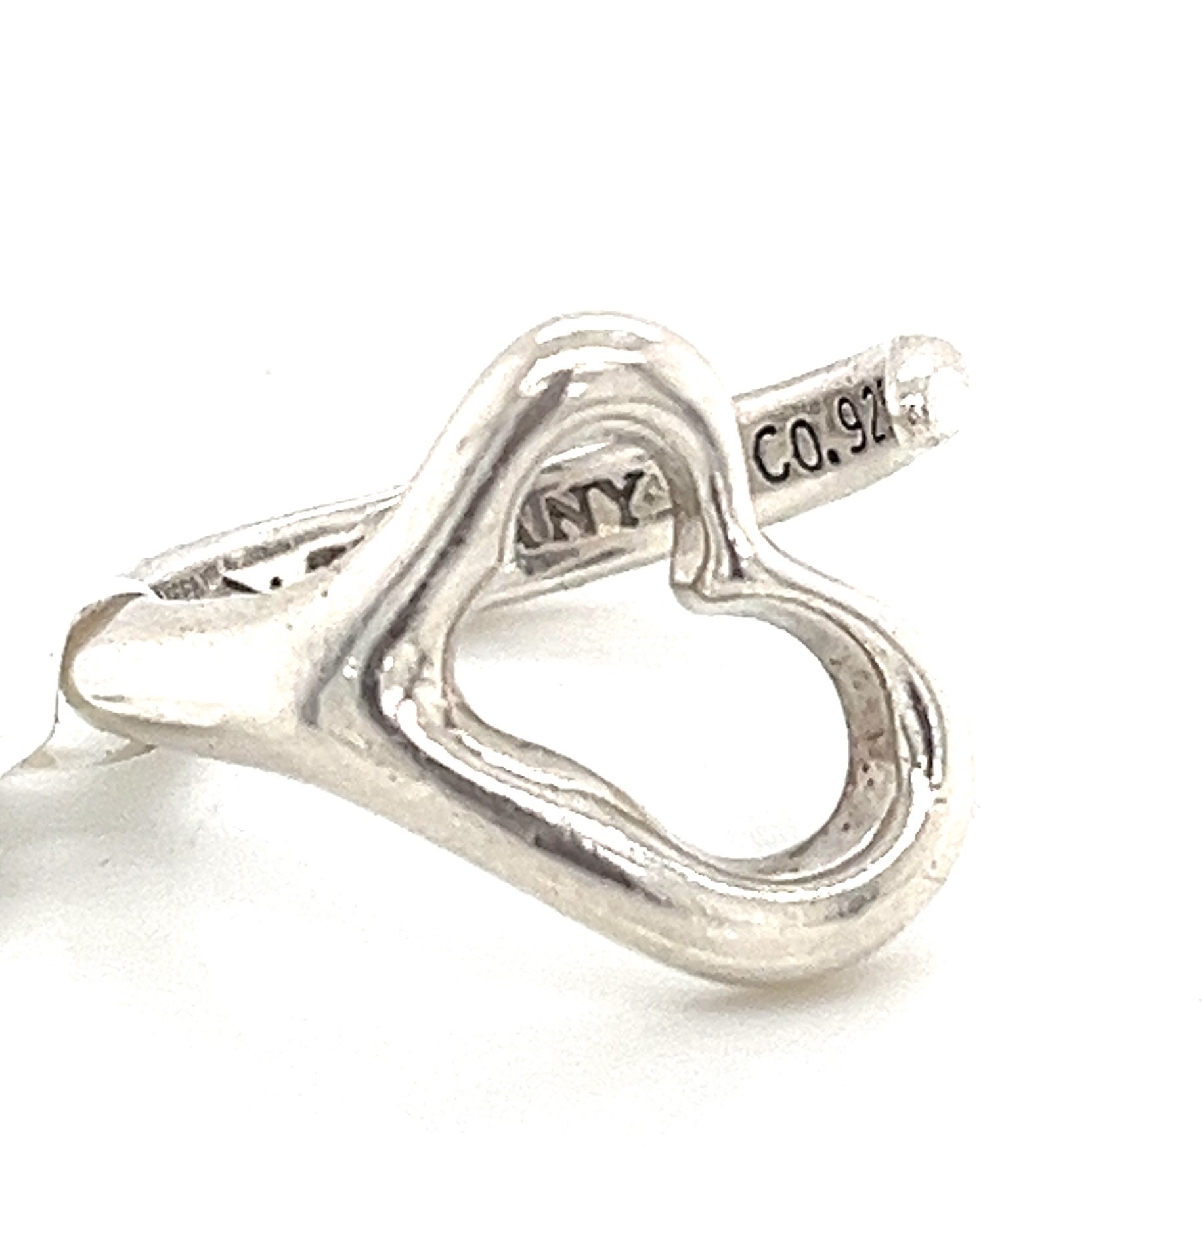 Tiffany & Co. Elsa Peretti Open Heart Ring in Sterling Silver Size 6